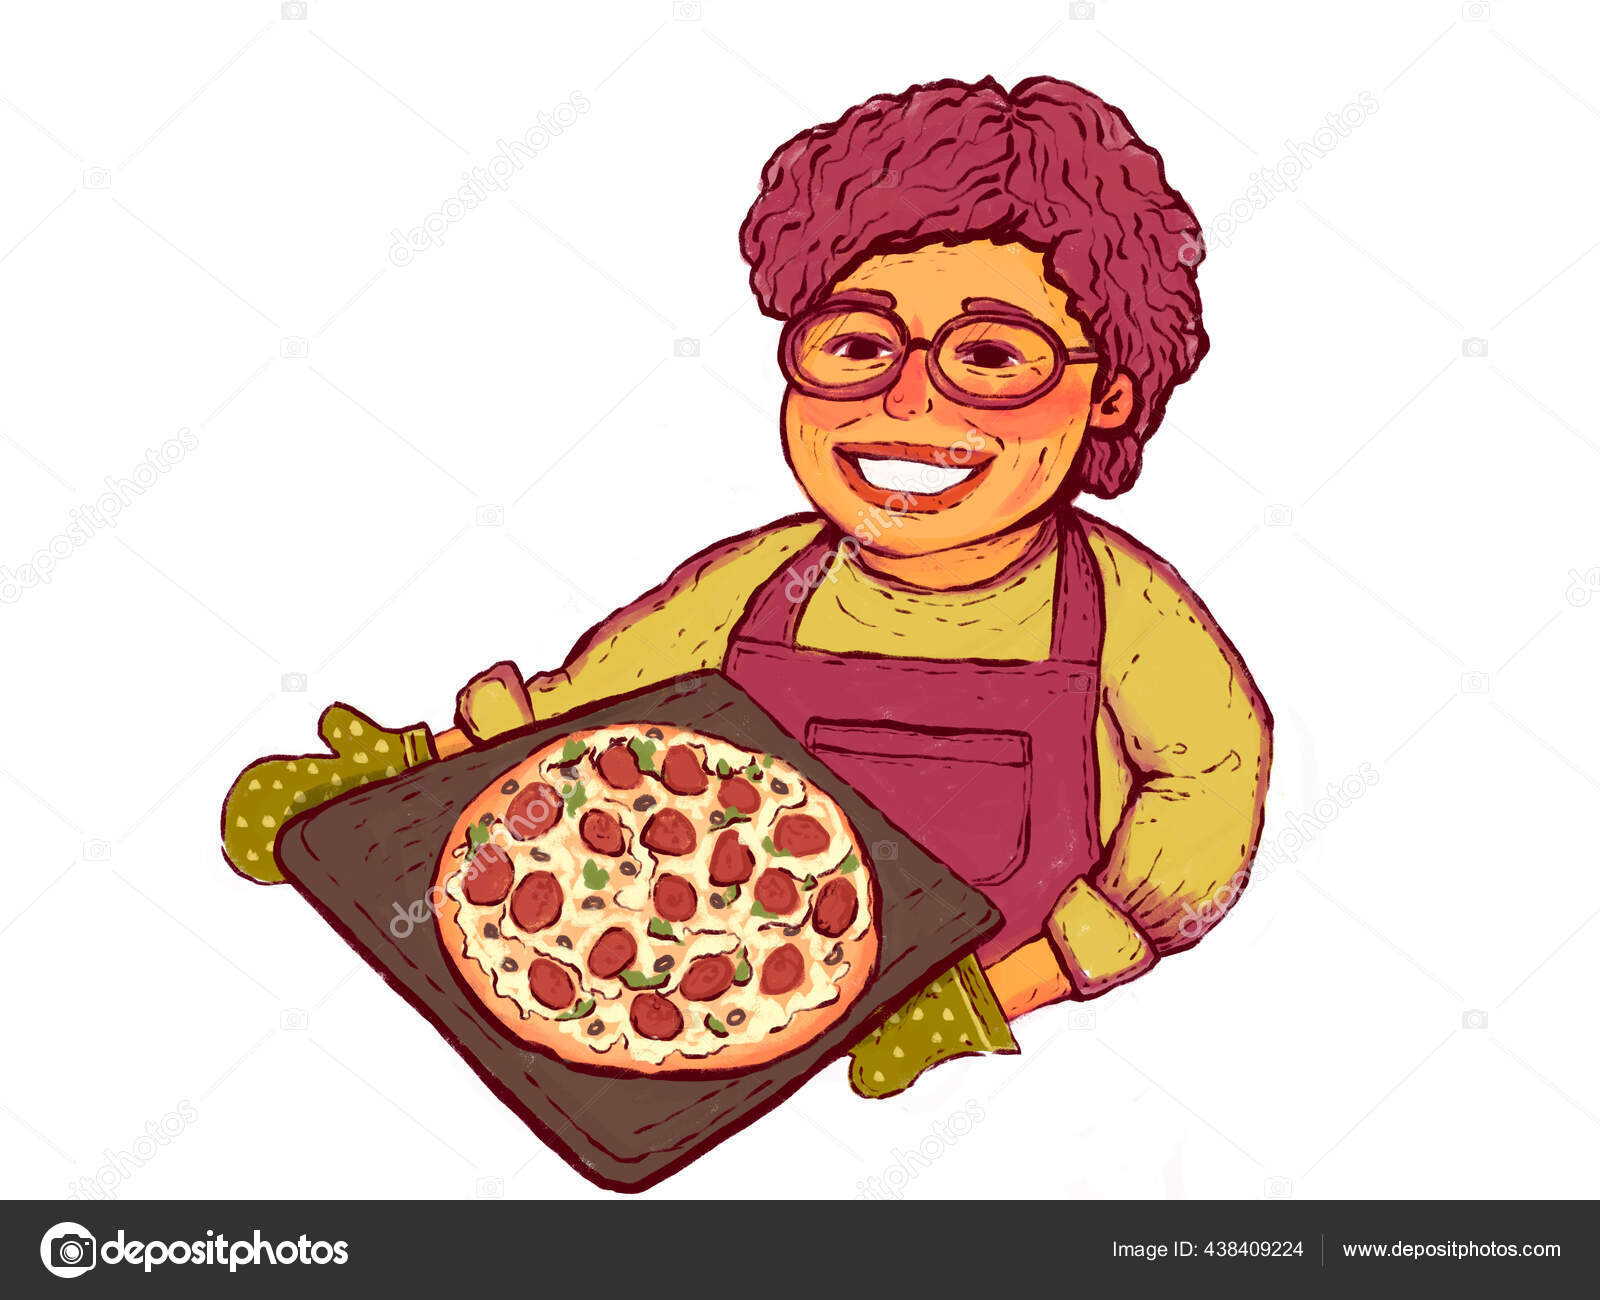 Ilustrasi Seorang Nenek Atau Ibu Yang Memanggang Pizza Buatan Sendiri Stok Foto Luboffke 438409224